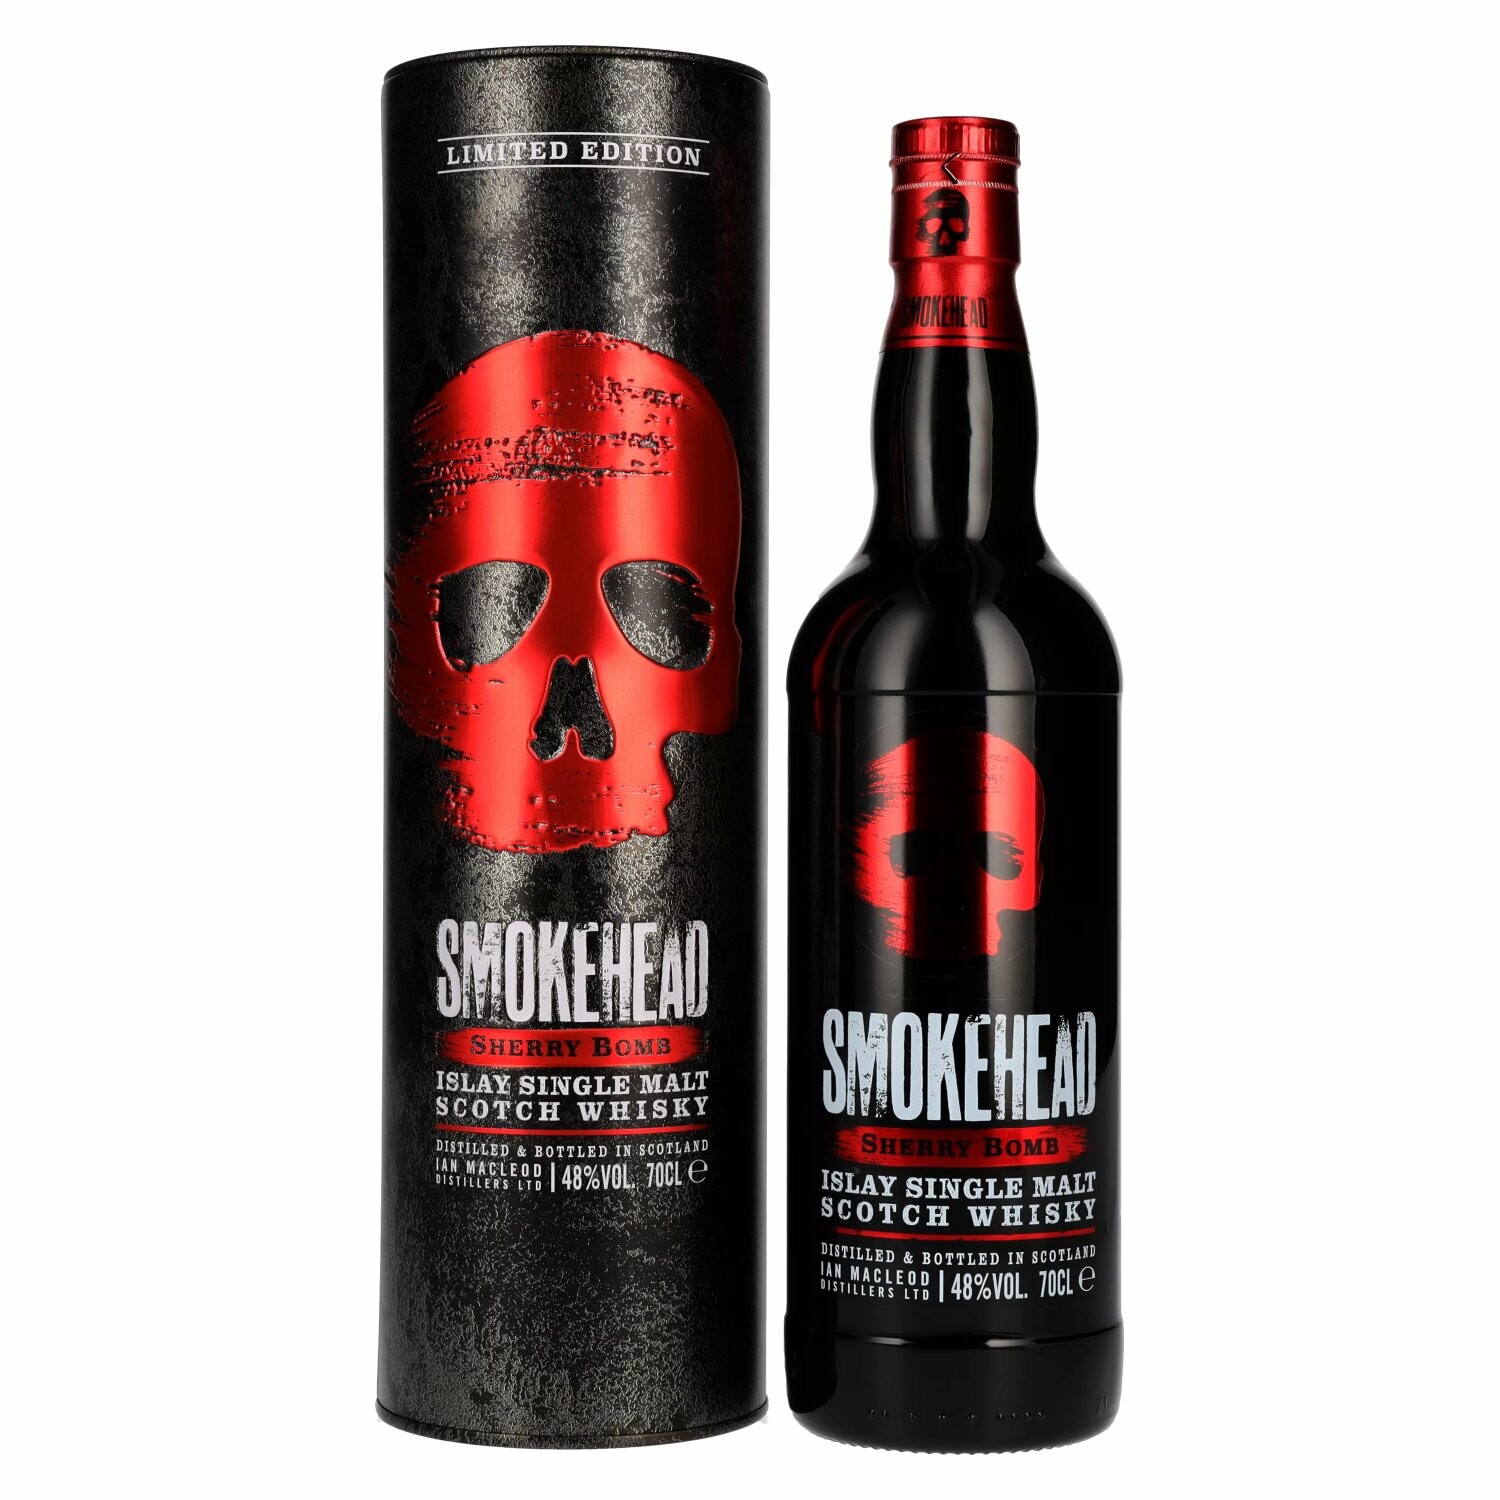 Smokehead SHERRY BOMB Islay Single Malt Scotch Whisky 48% Vol. 0,7l in Tinbox